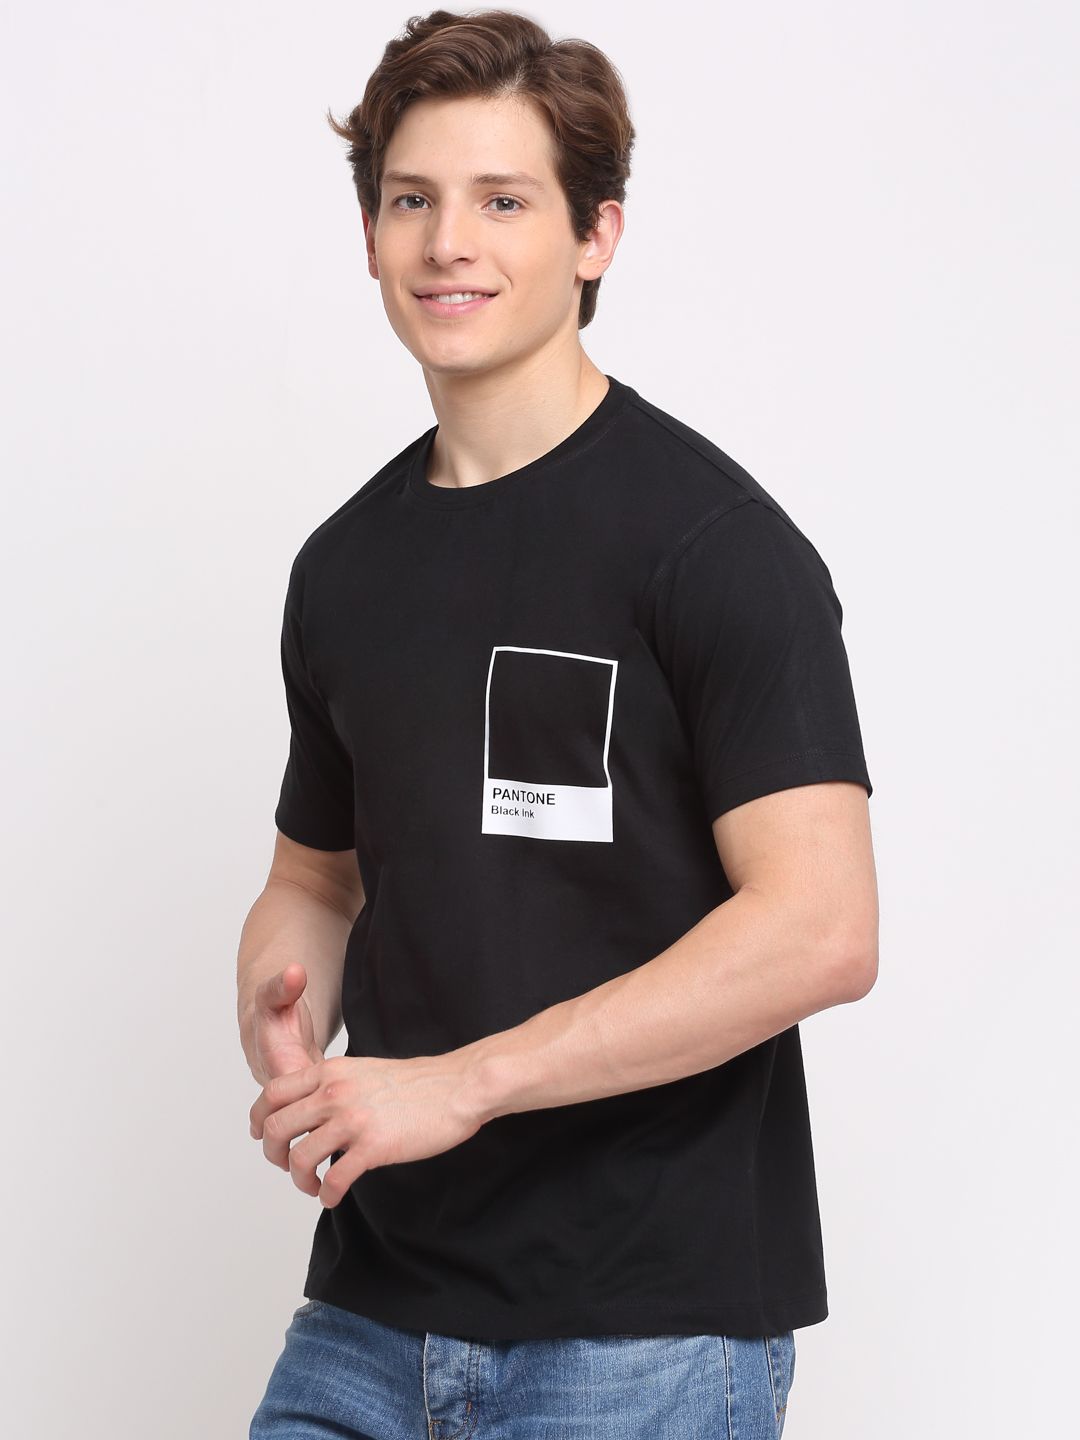 Minimalisitc Pattern, Men Combed Cotton Black T-Shirt